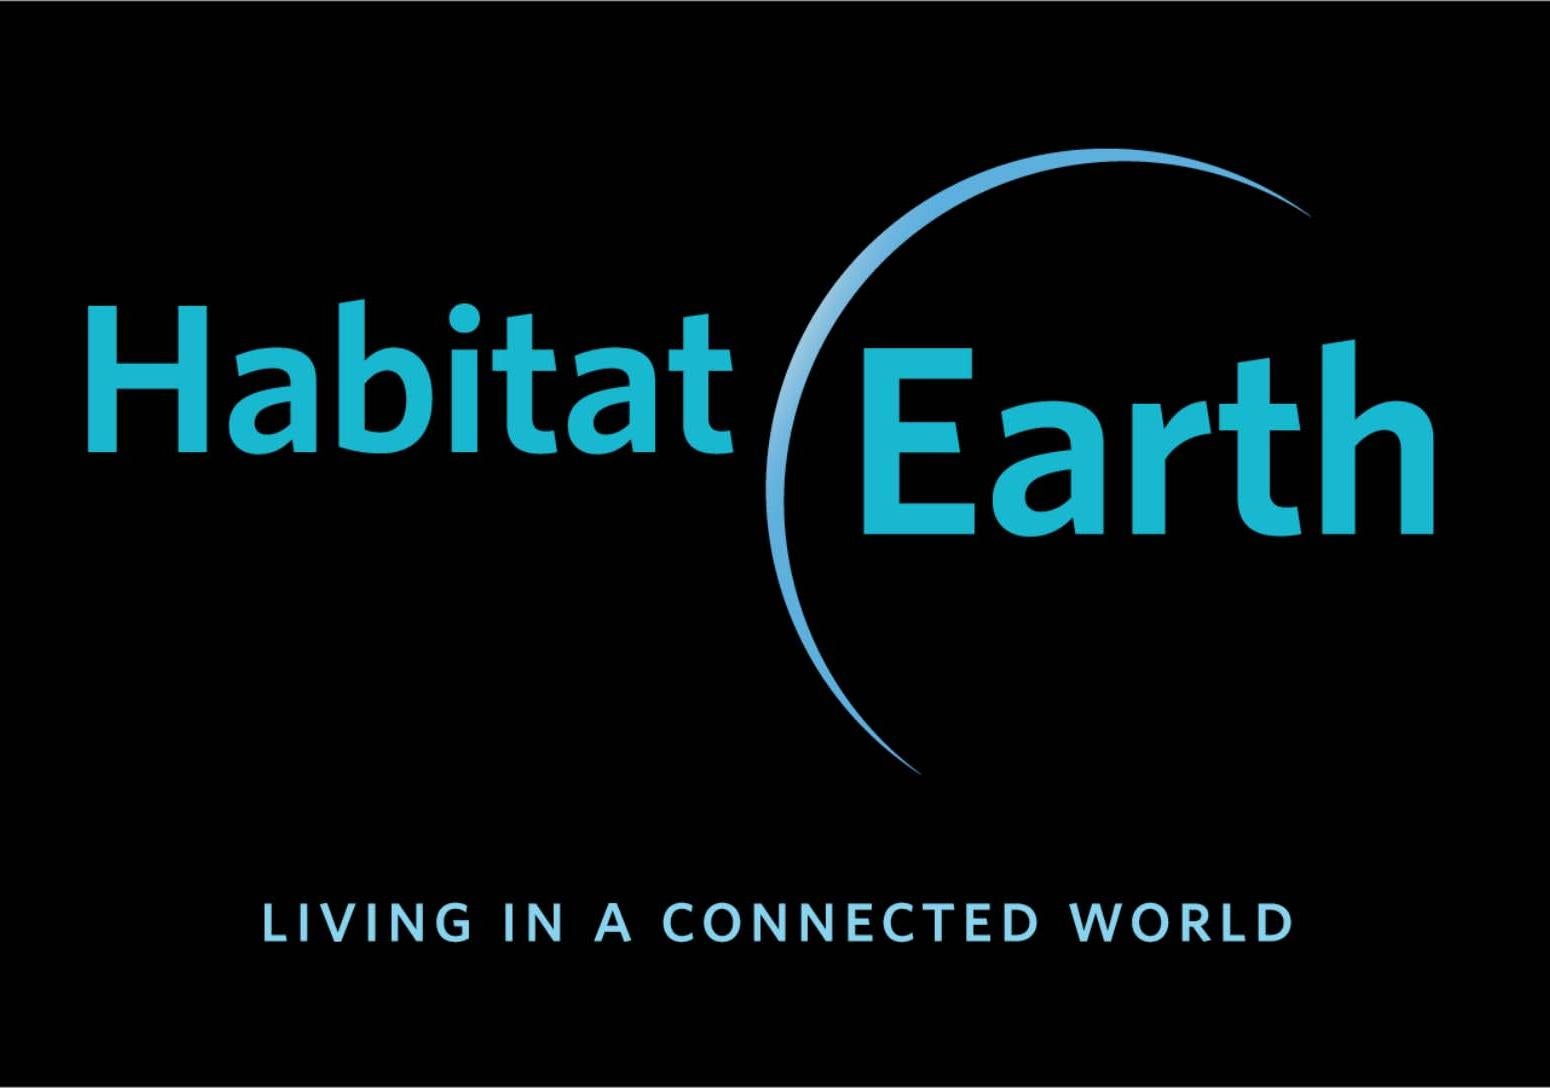 Habitat Earth Planetarium Show Title in Blue on Black background